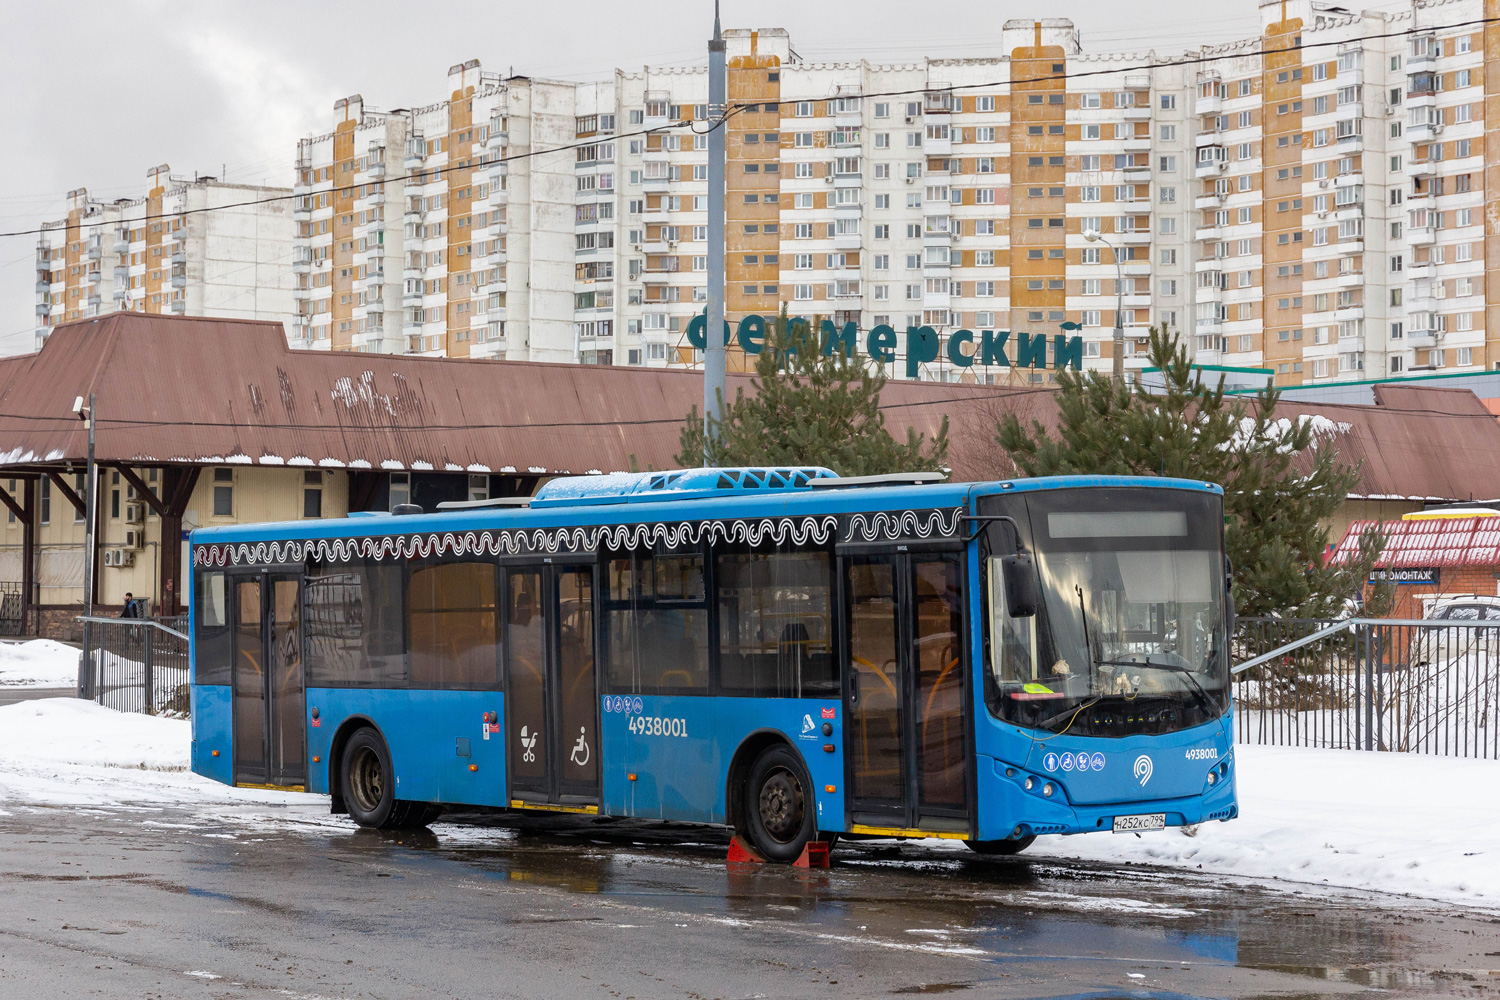 Moskva, Volgabus-5270.02 č. 4938001